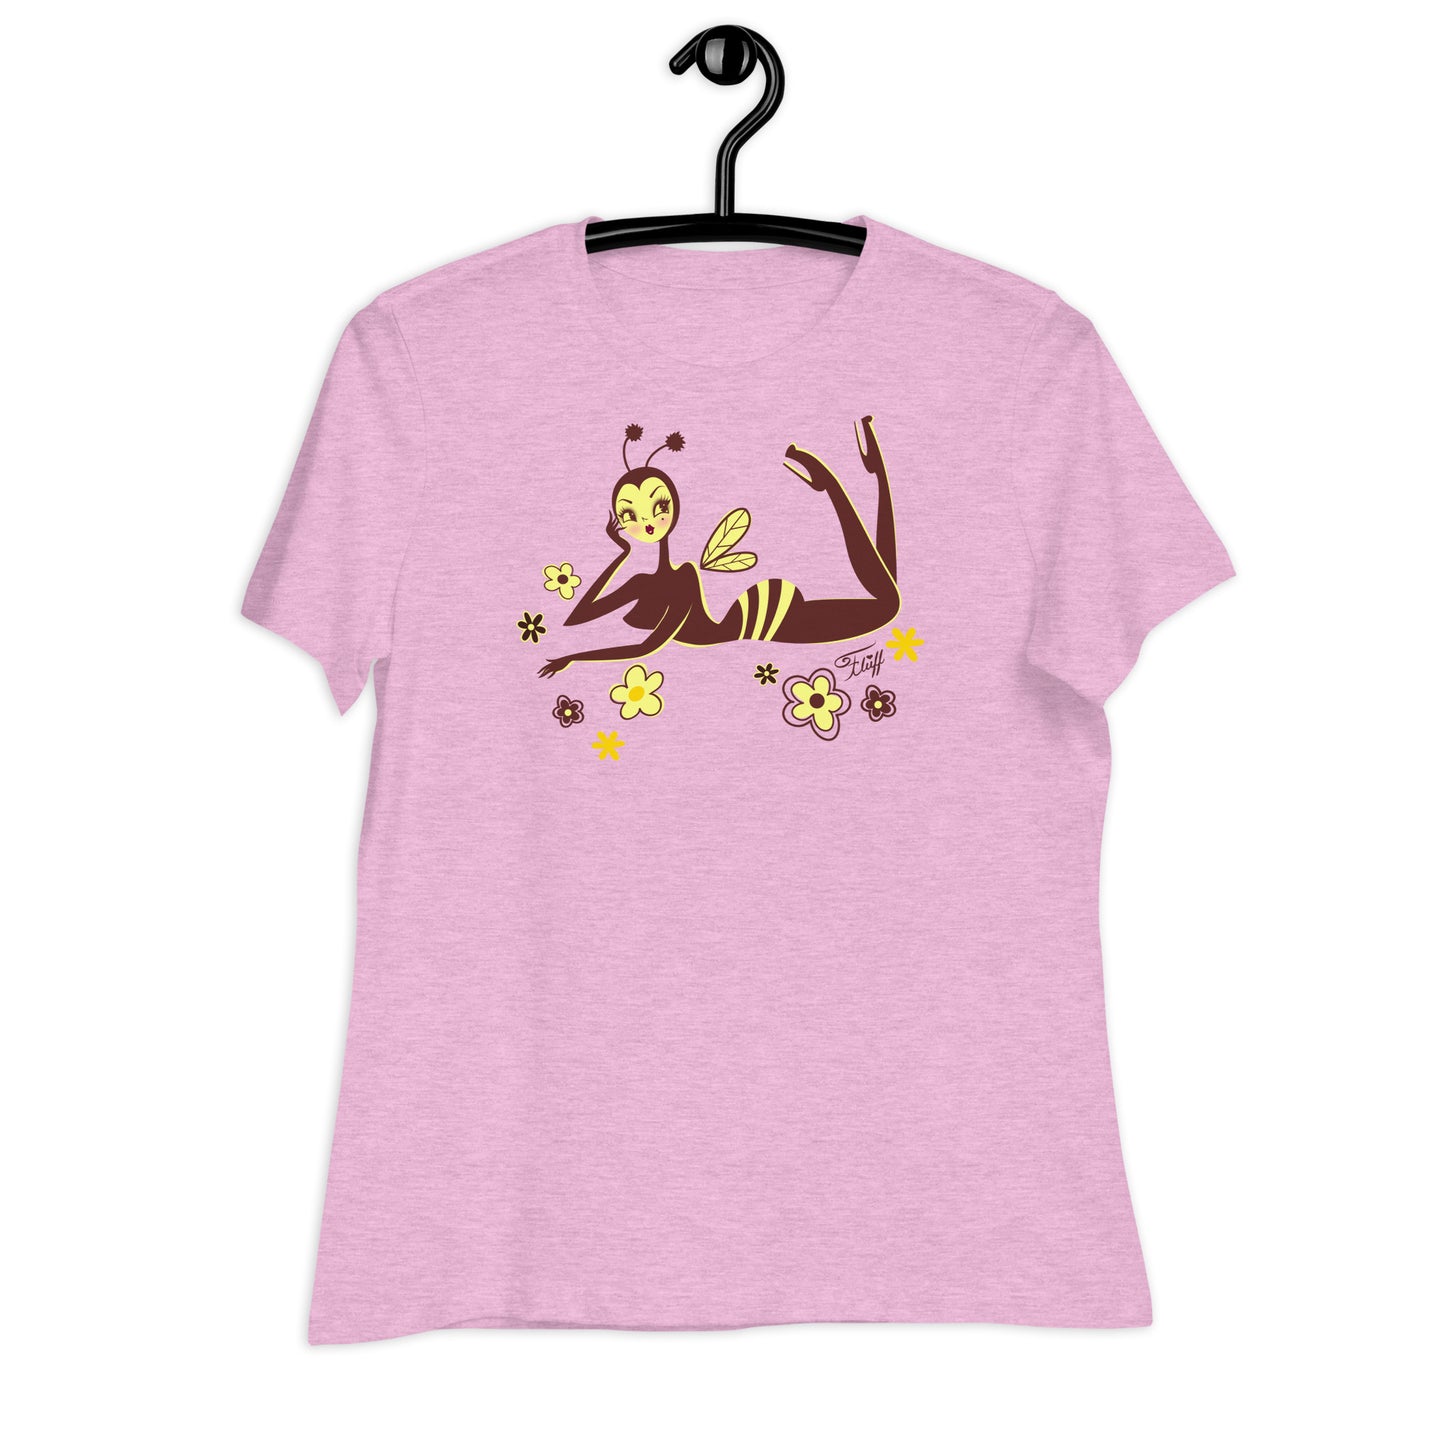 Bee Girl Lounging • Women's Relaxed T-Shirt